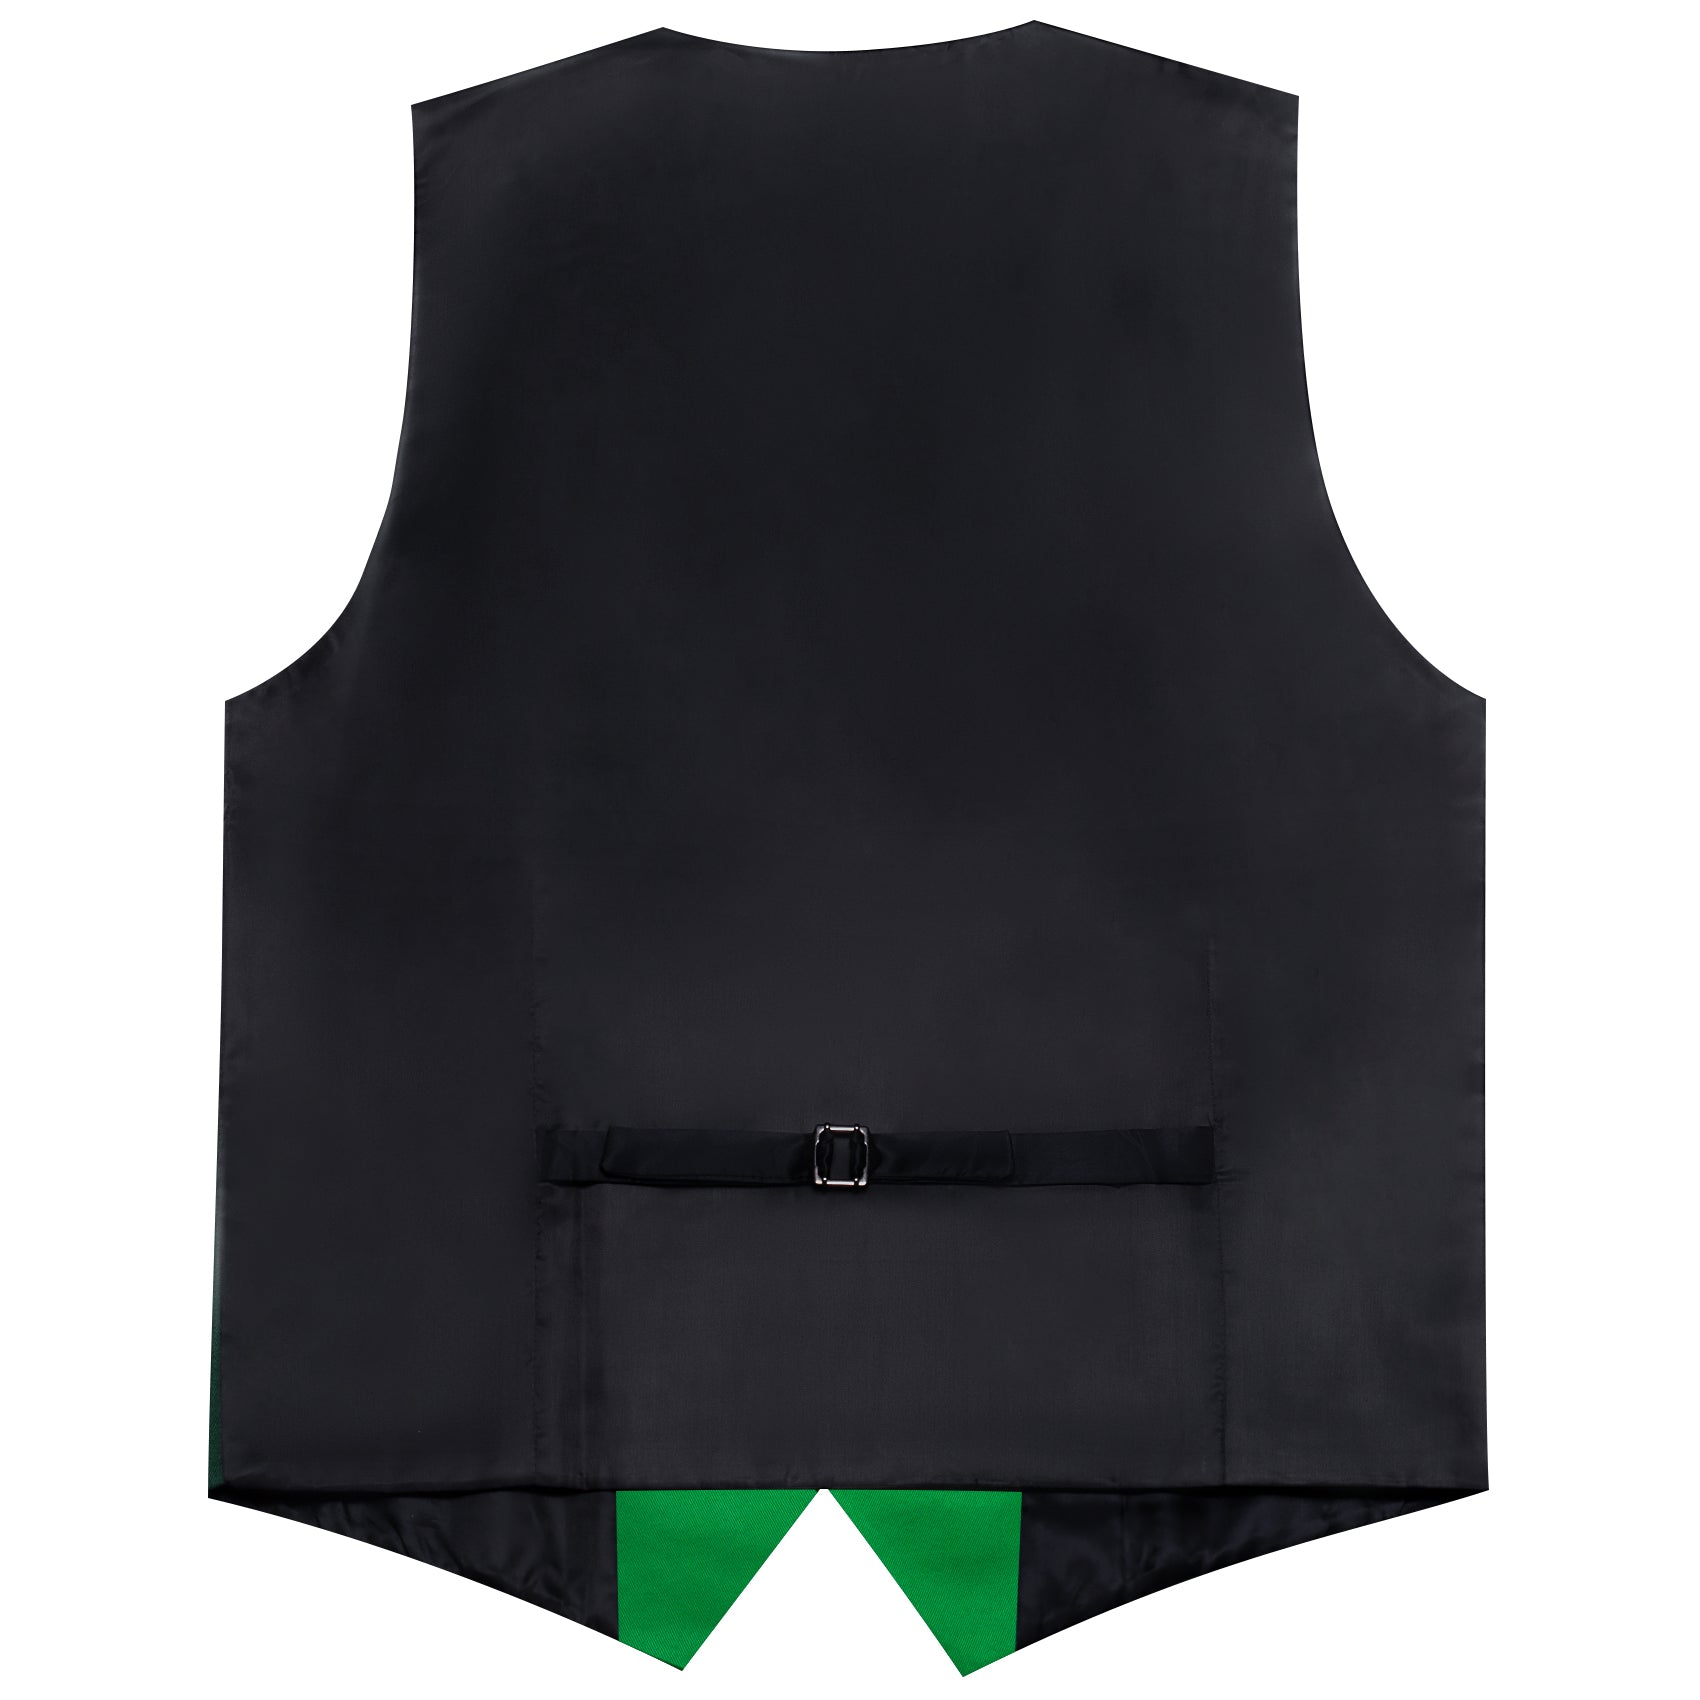 Barry.wang Green Solid Vest Waistcoat Set